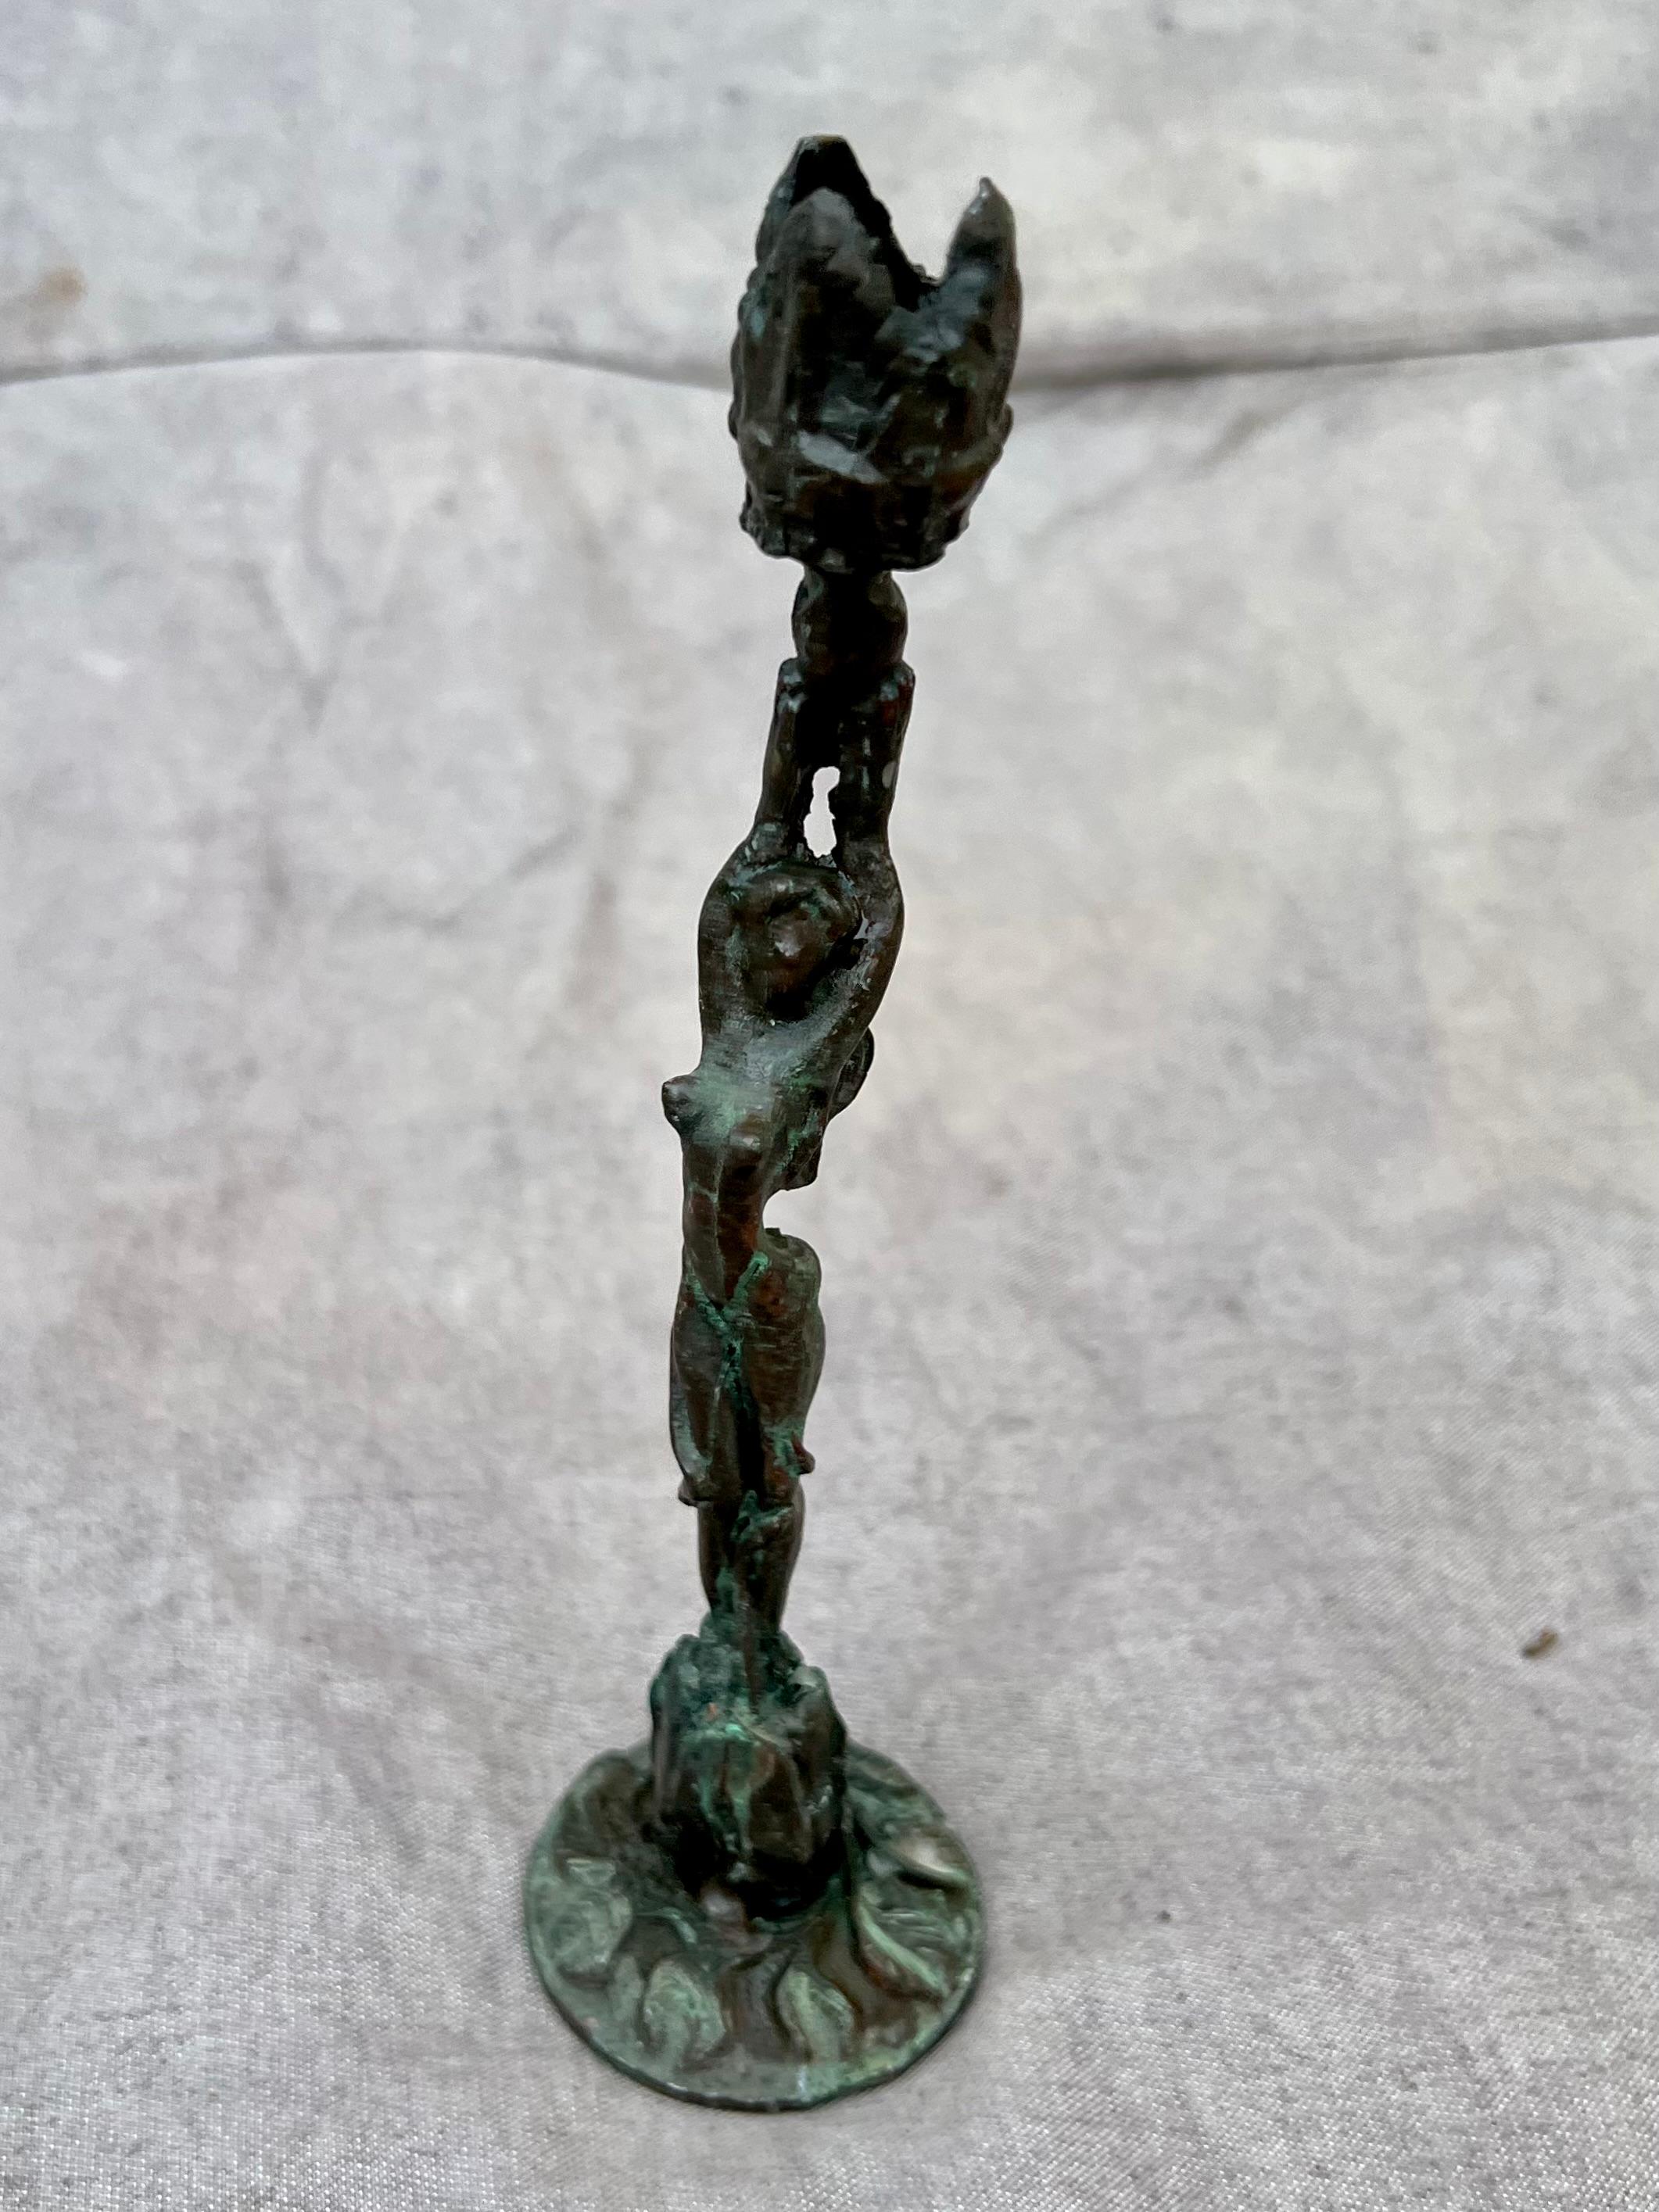 20th Century Art Nouveau Goddess Figurine Candlestick Holder For Sale